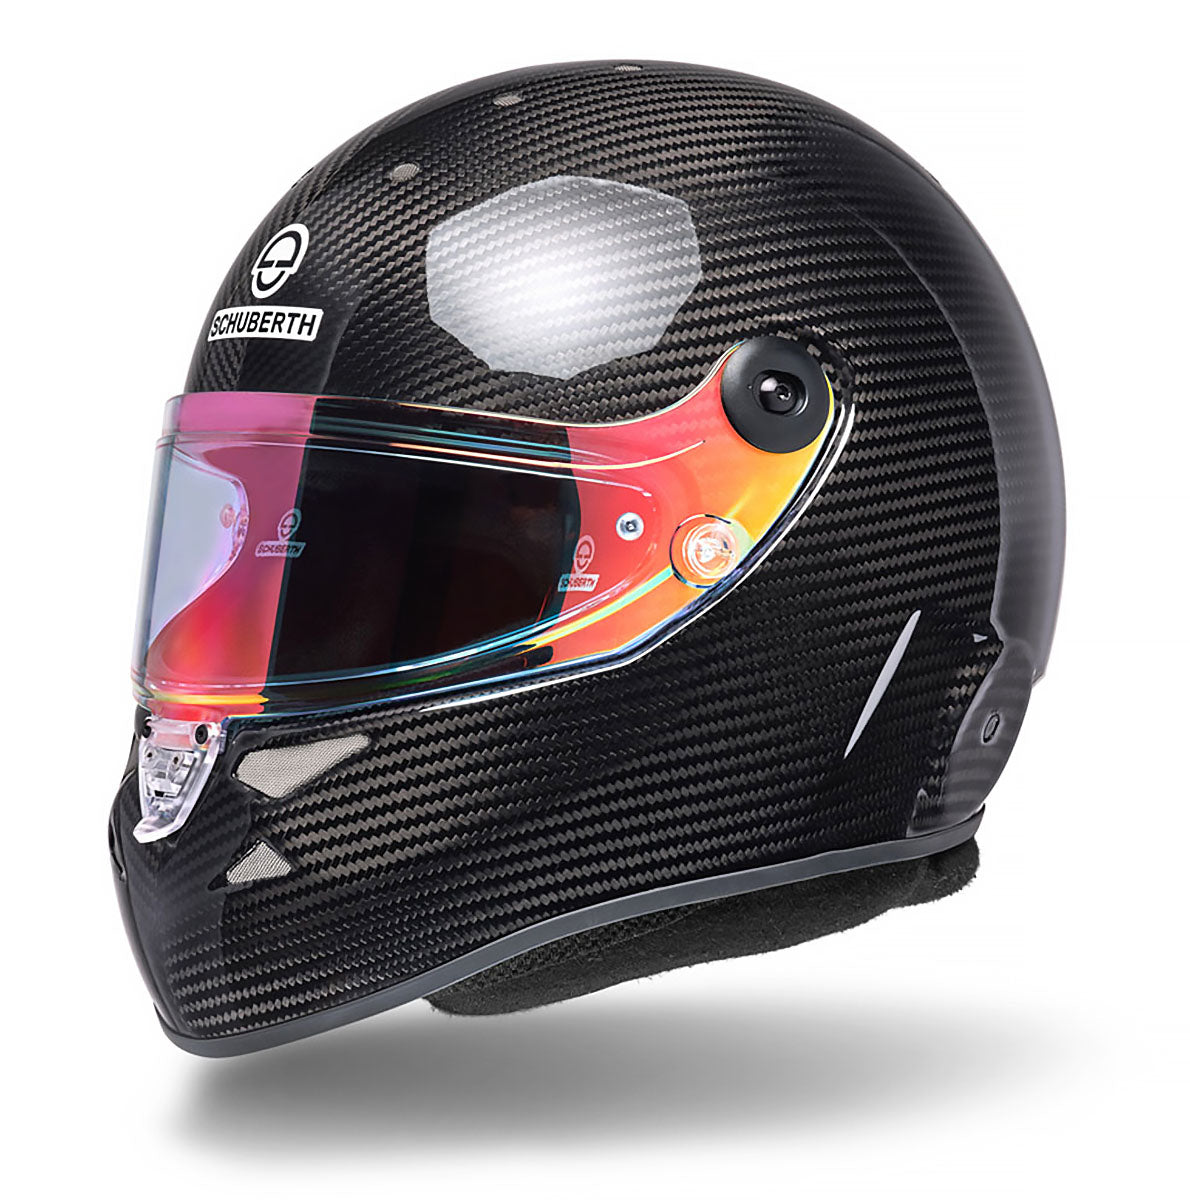 Schuberth SP1 Carbon Fiber Racing Helmet: Lightweight and Aerodynamic Design